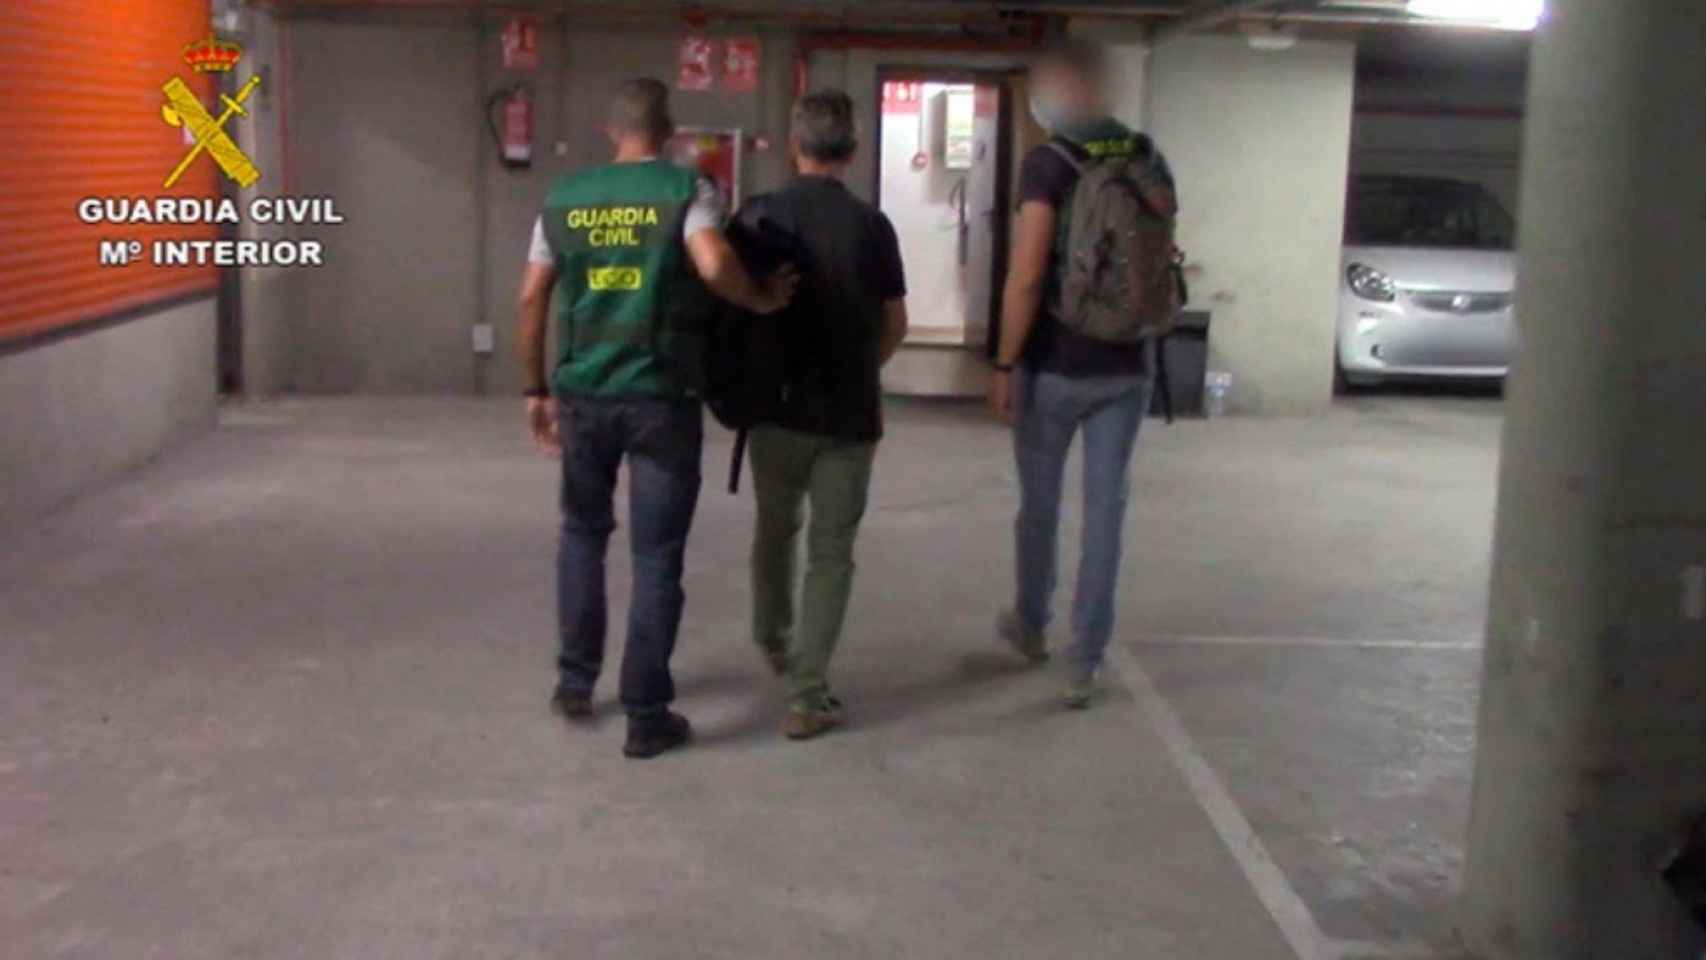 La Guardia Civil deteniendo al pedófilo que huyó de Estados Unidos en Barcelona / GUARDIA CIVIL